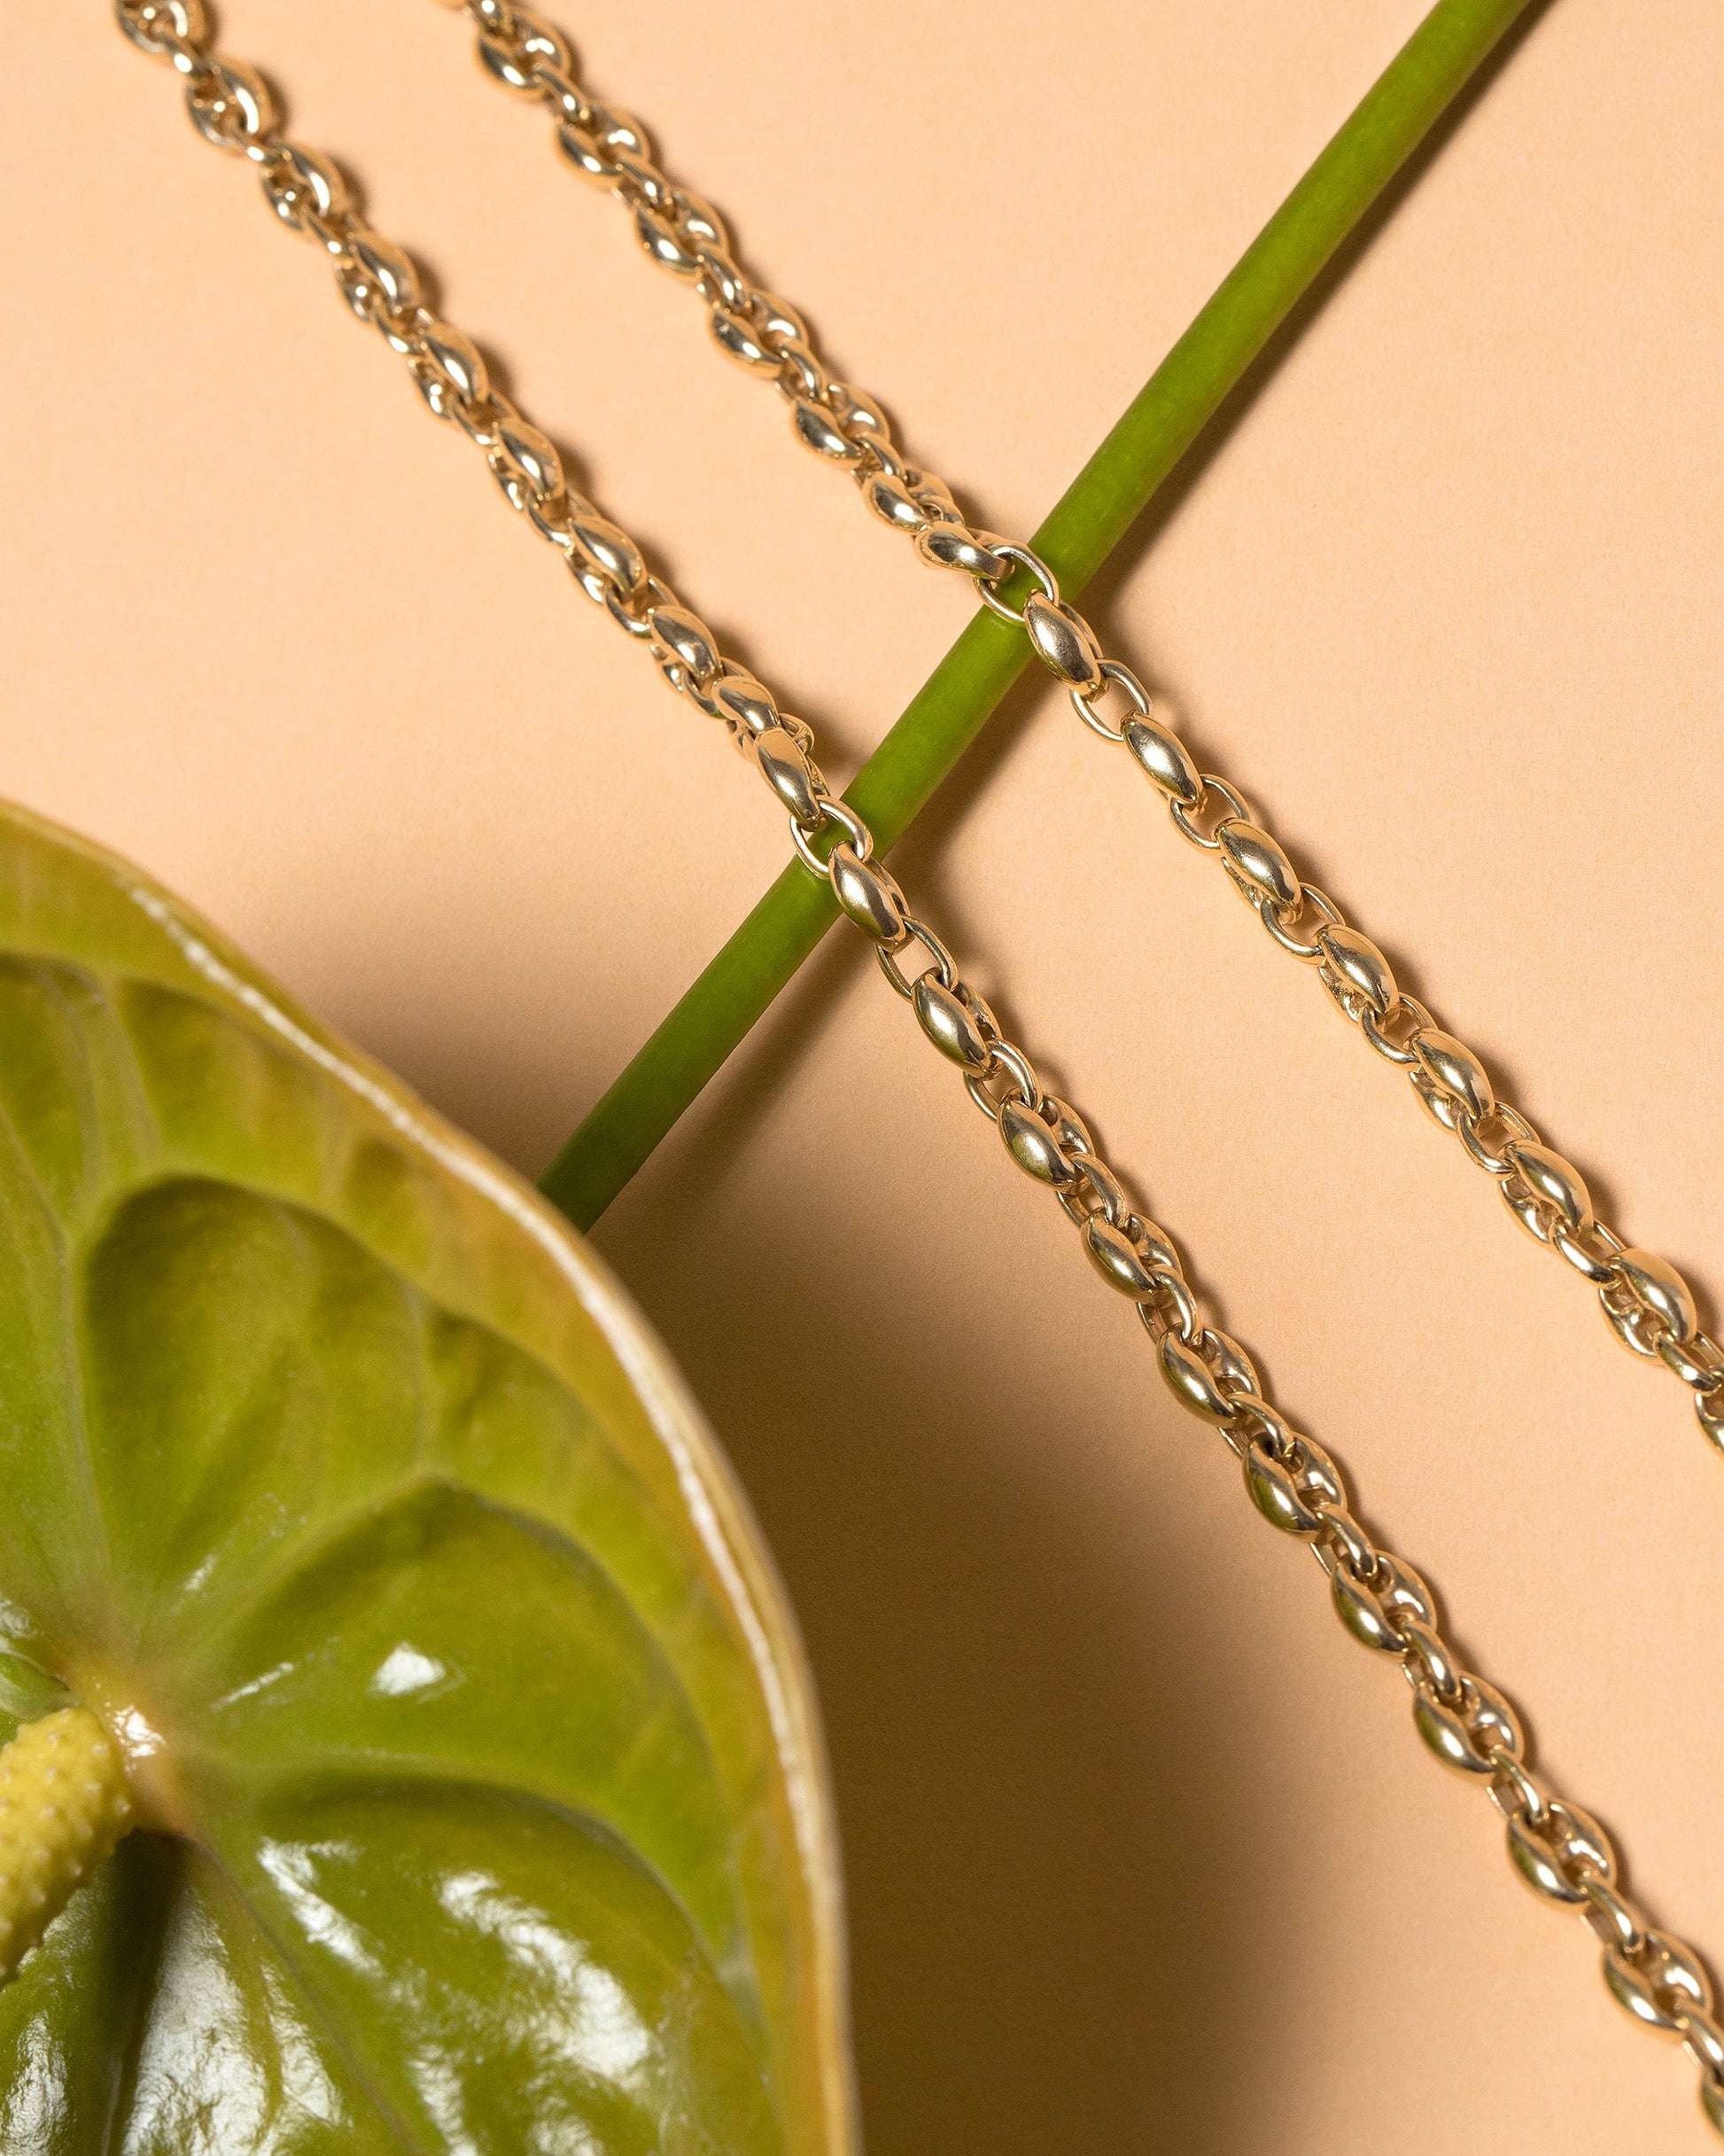  Segmented Chain Bracelet on light color background.